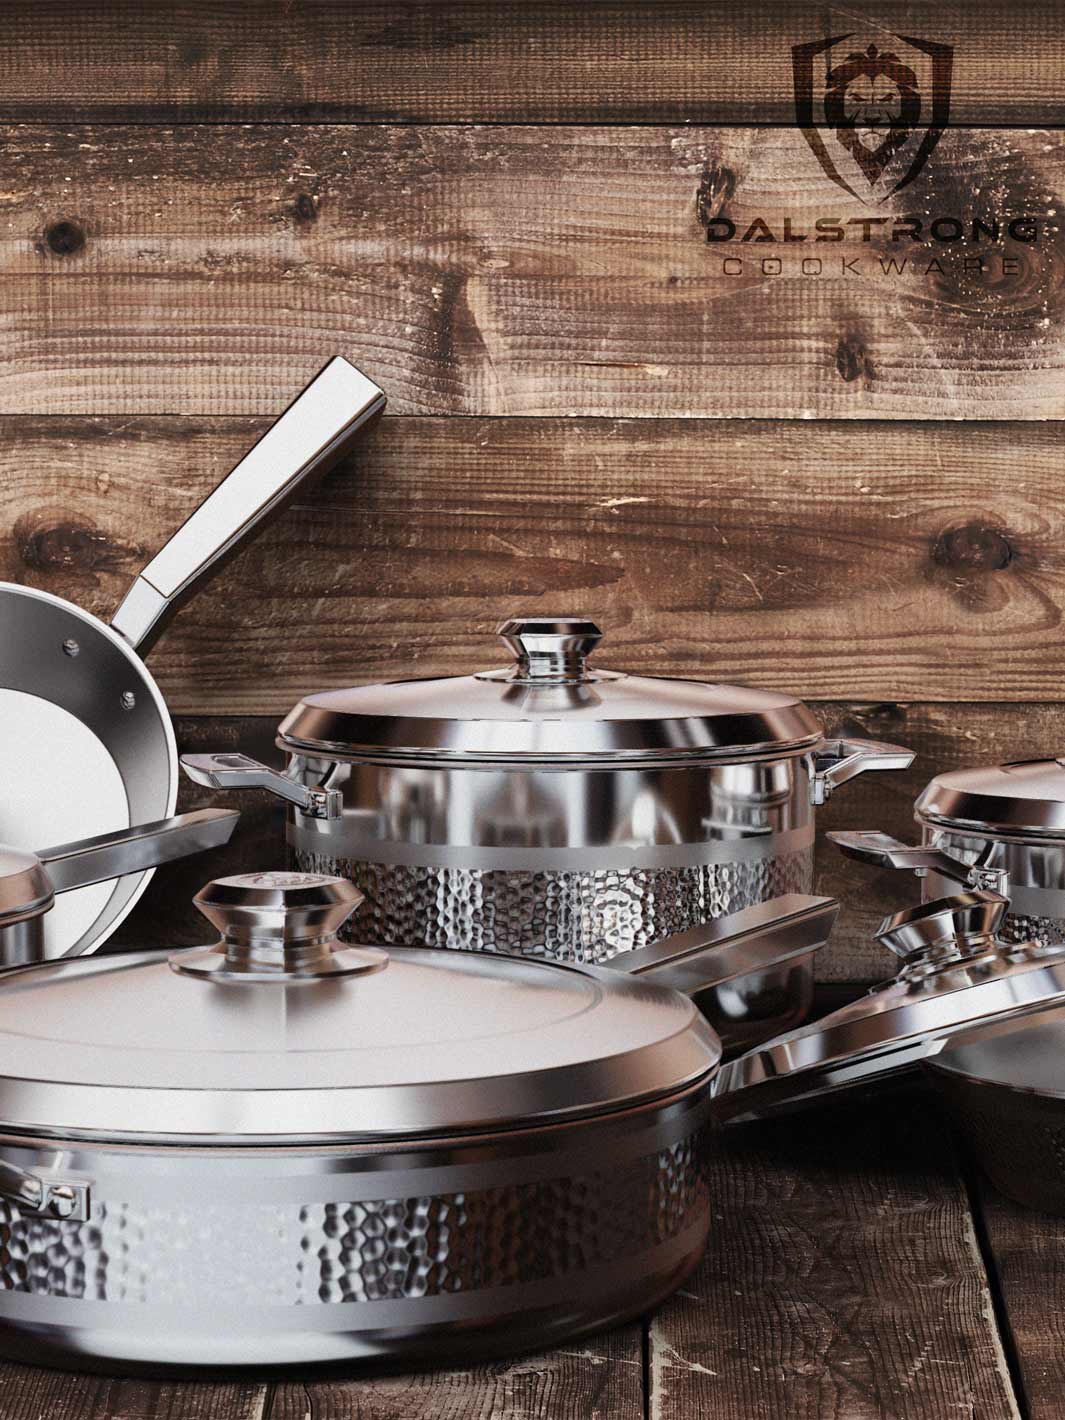 12 Piece Cookware Set | Silver | Avalon Series | Dalstrong ©